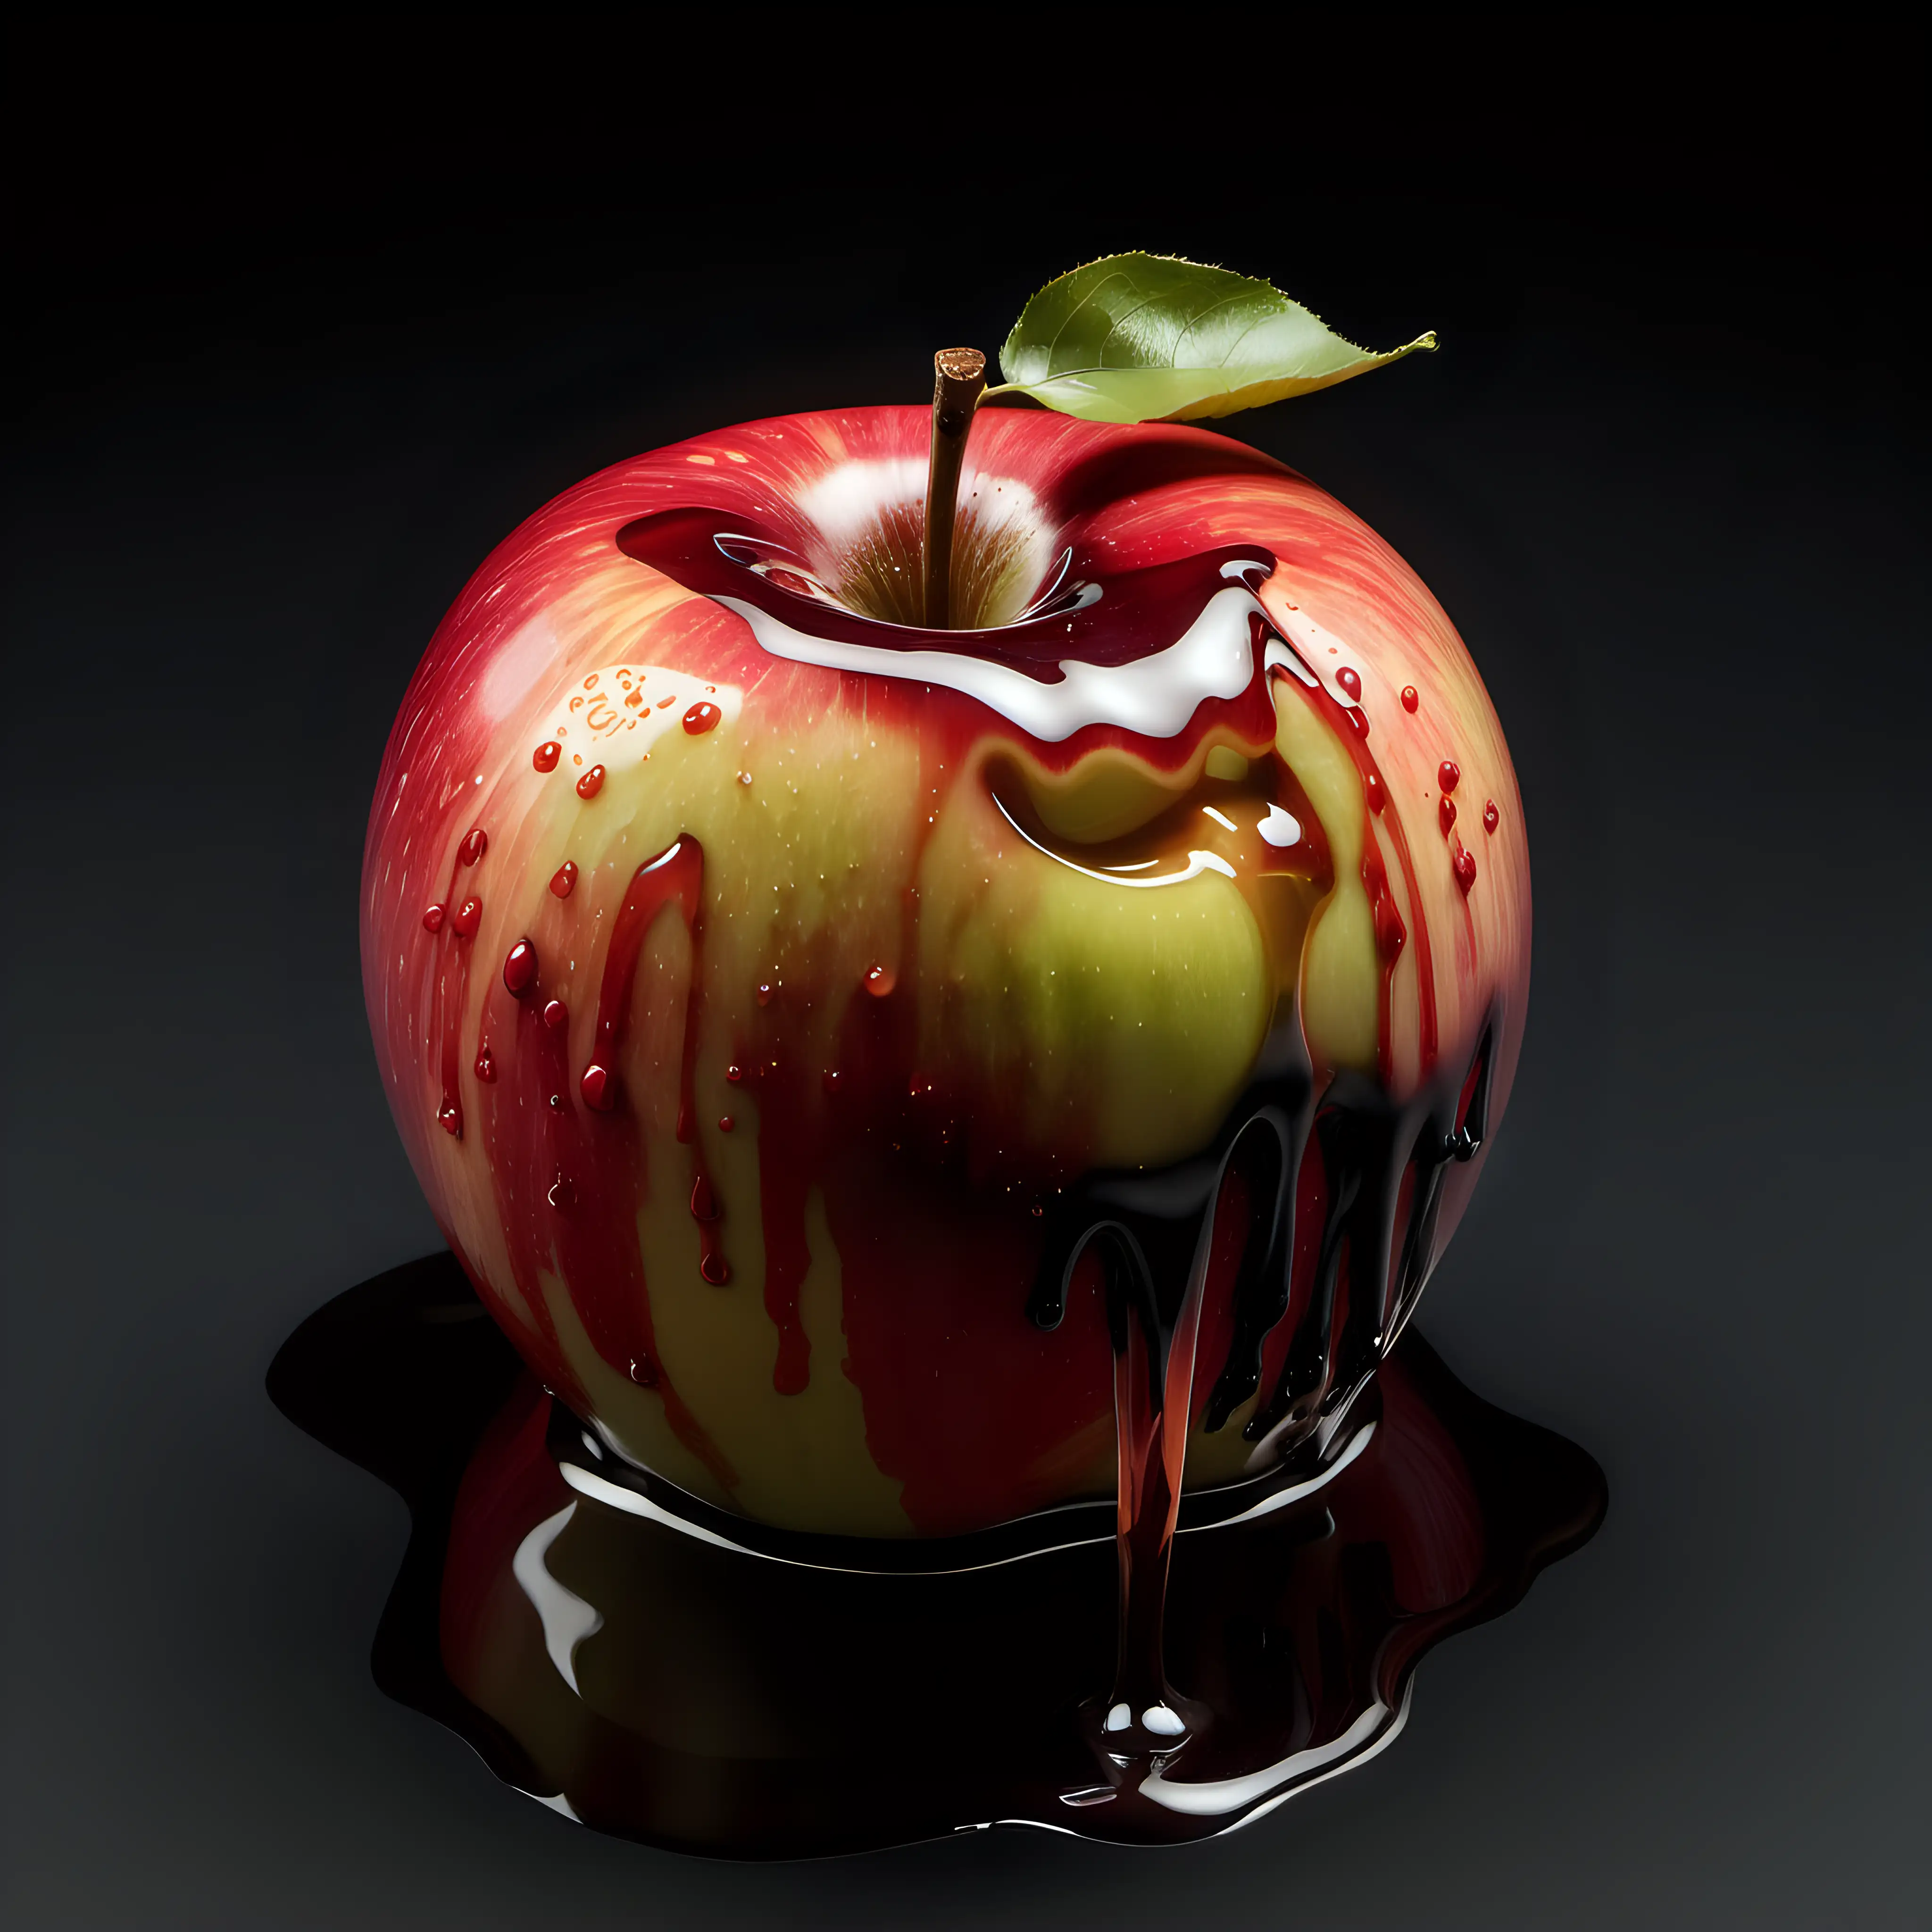 a melting apple, p –5.2